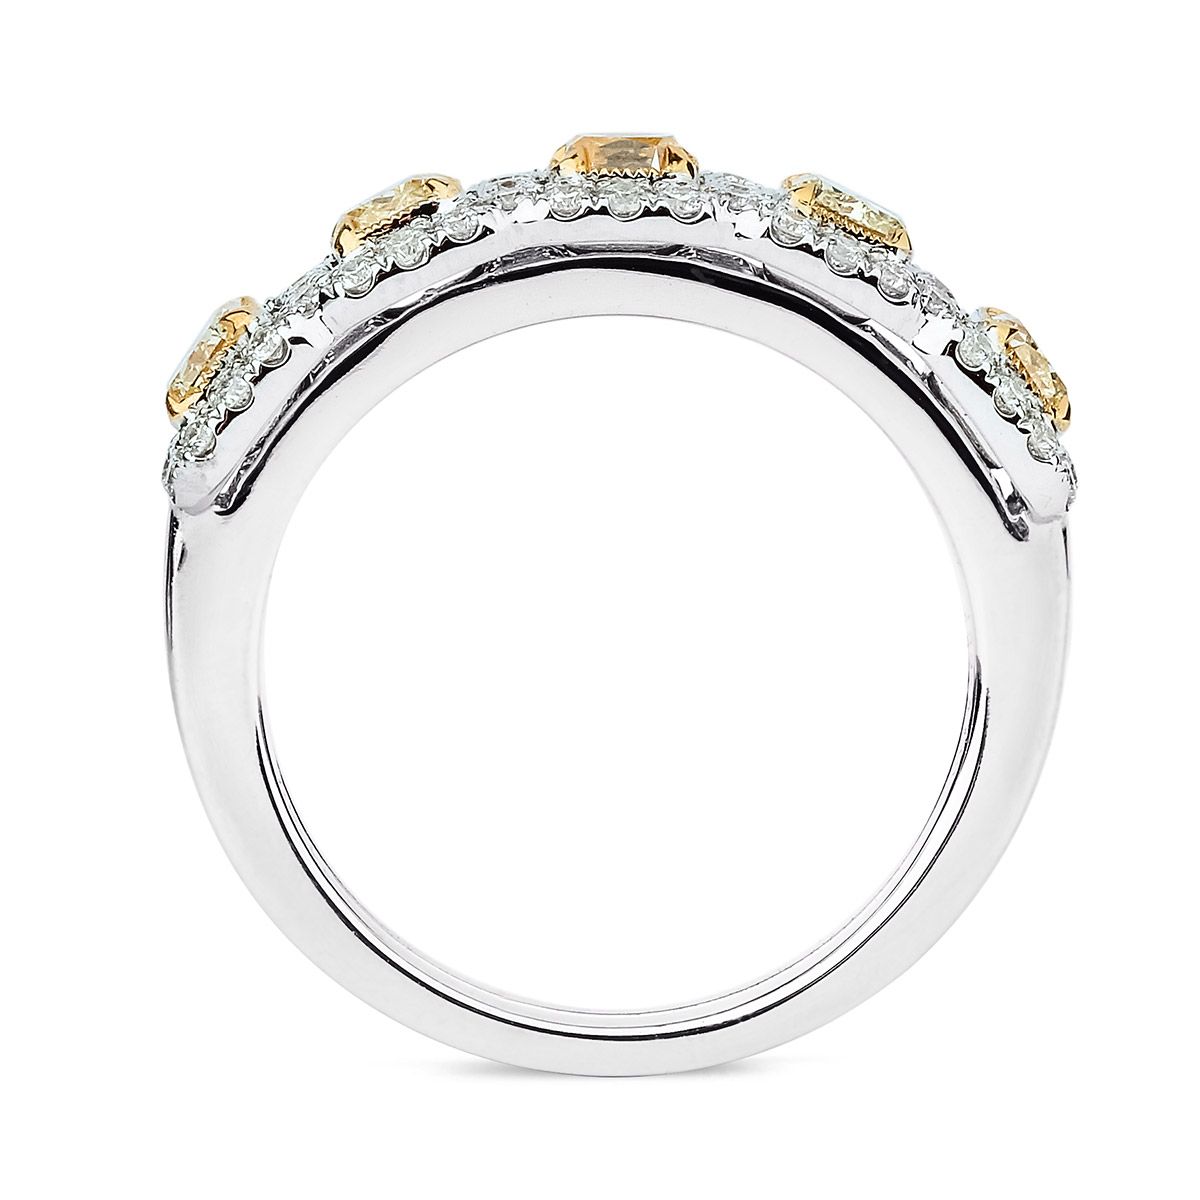 Fancy Intense Yellow Diamond Ring, 2.39 Ct. TW, Radiant shape